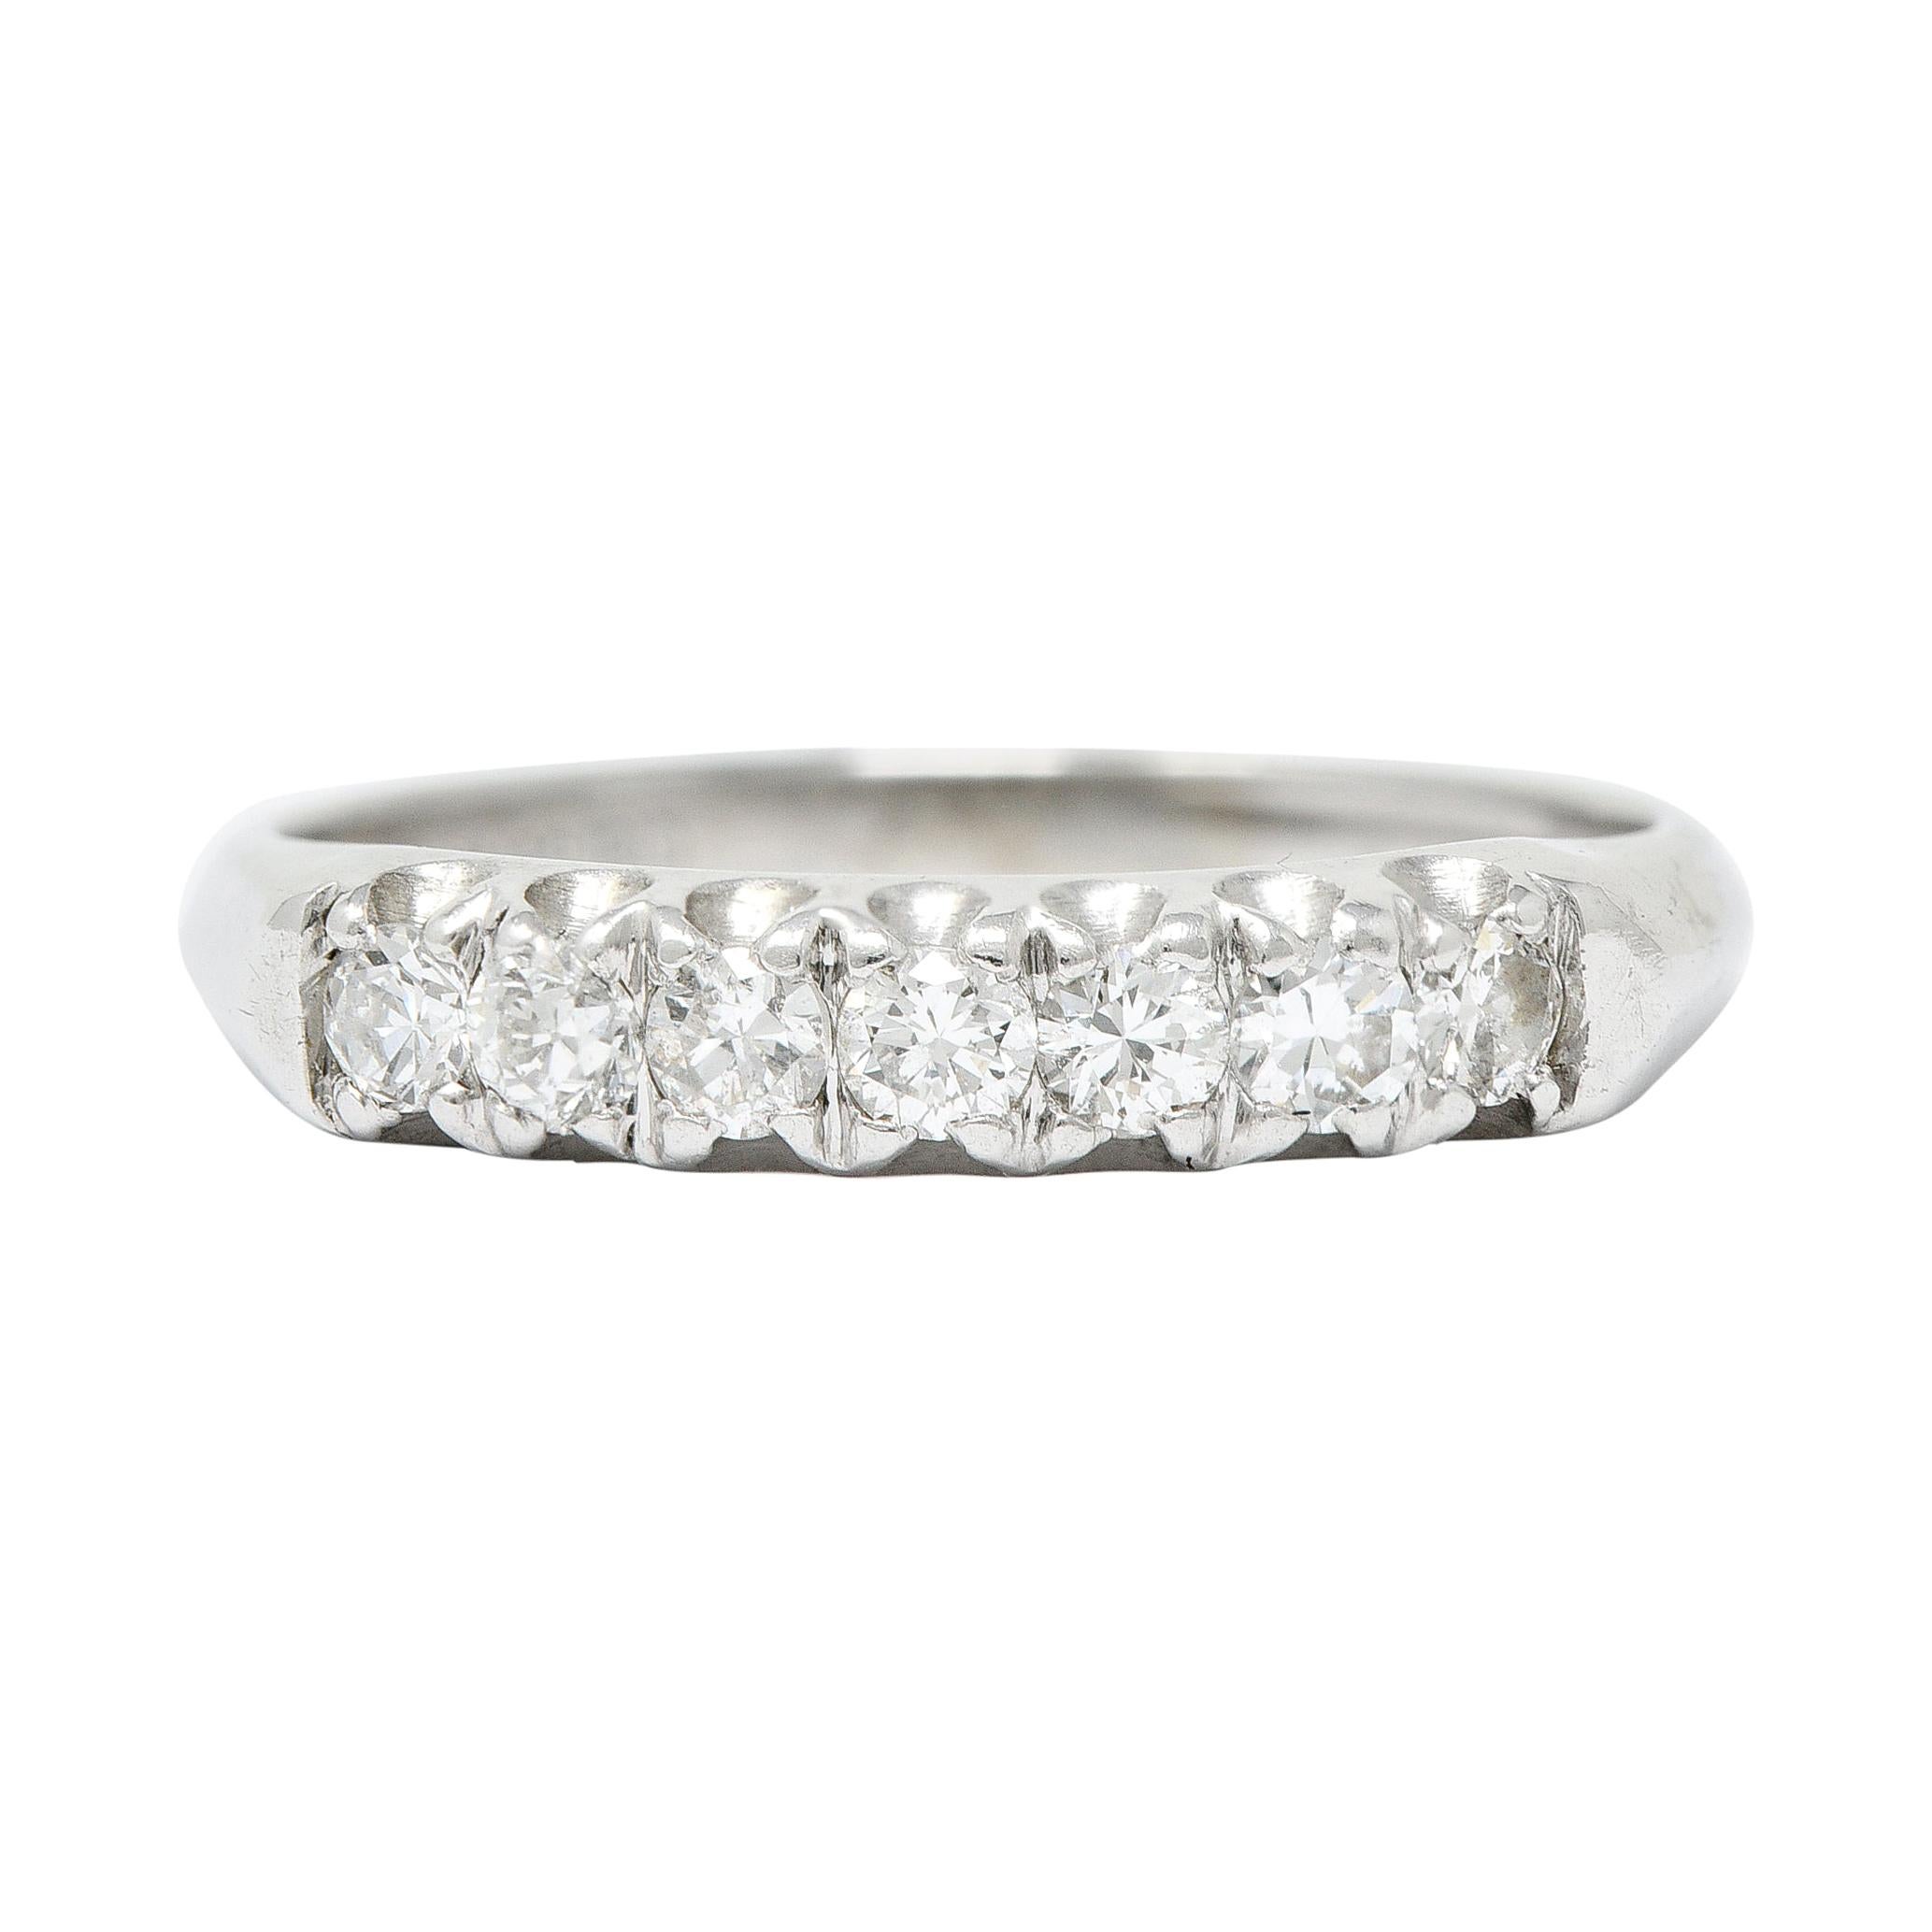 1940's Retro 0.35 Carat Diamond Platinum Fishtail Band Ring